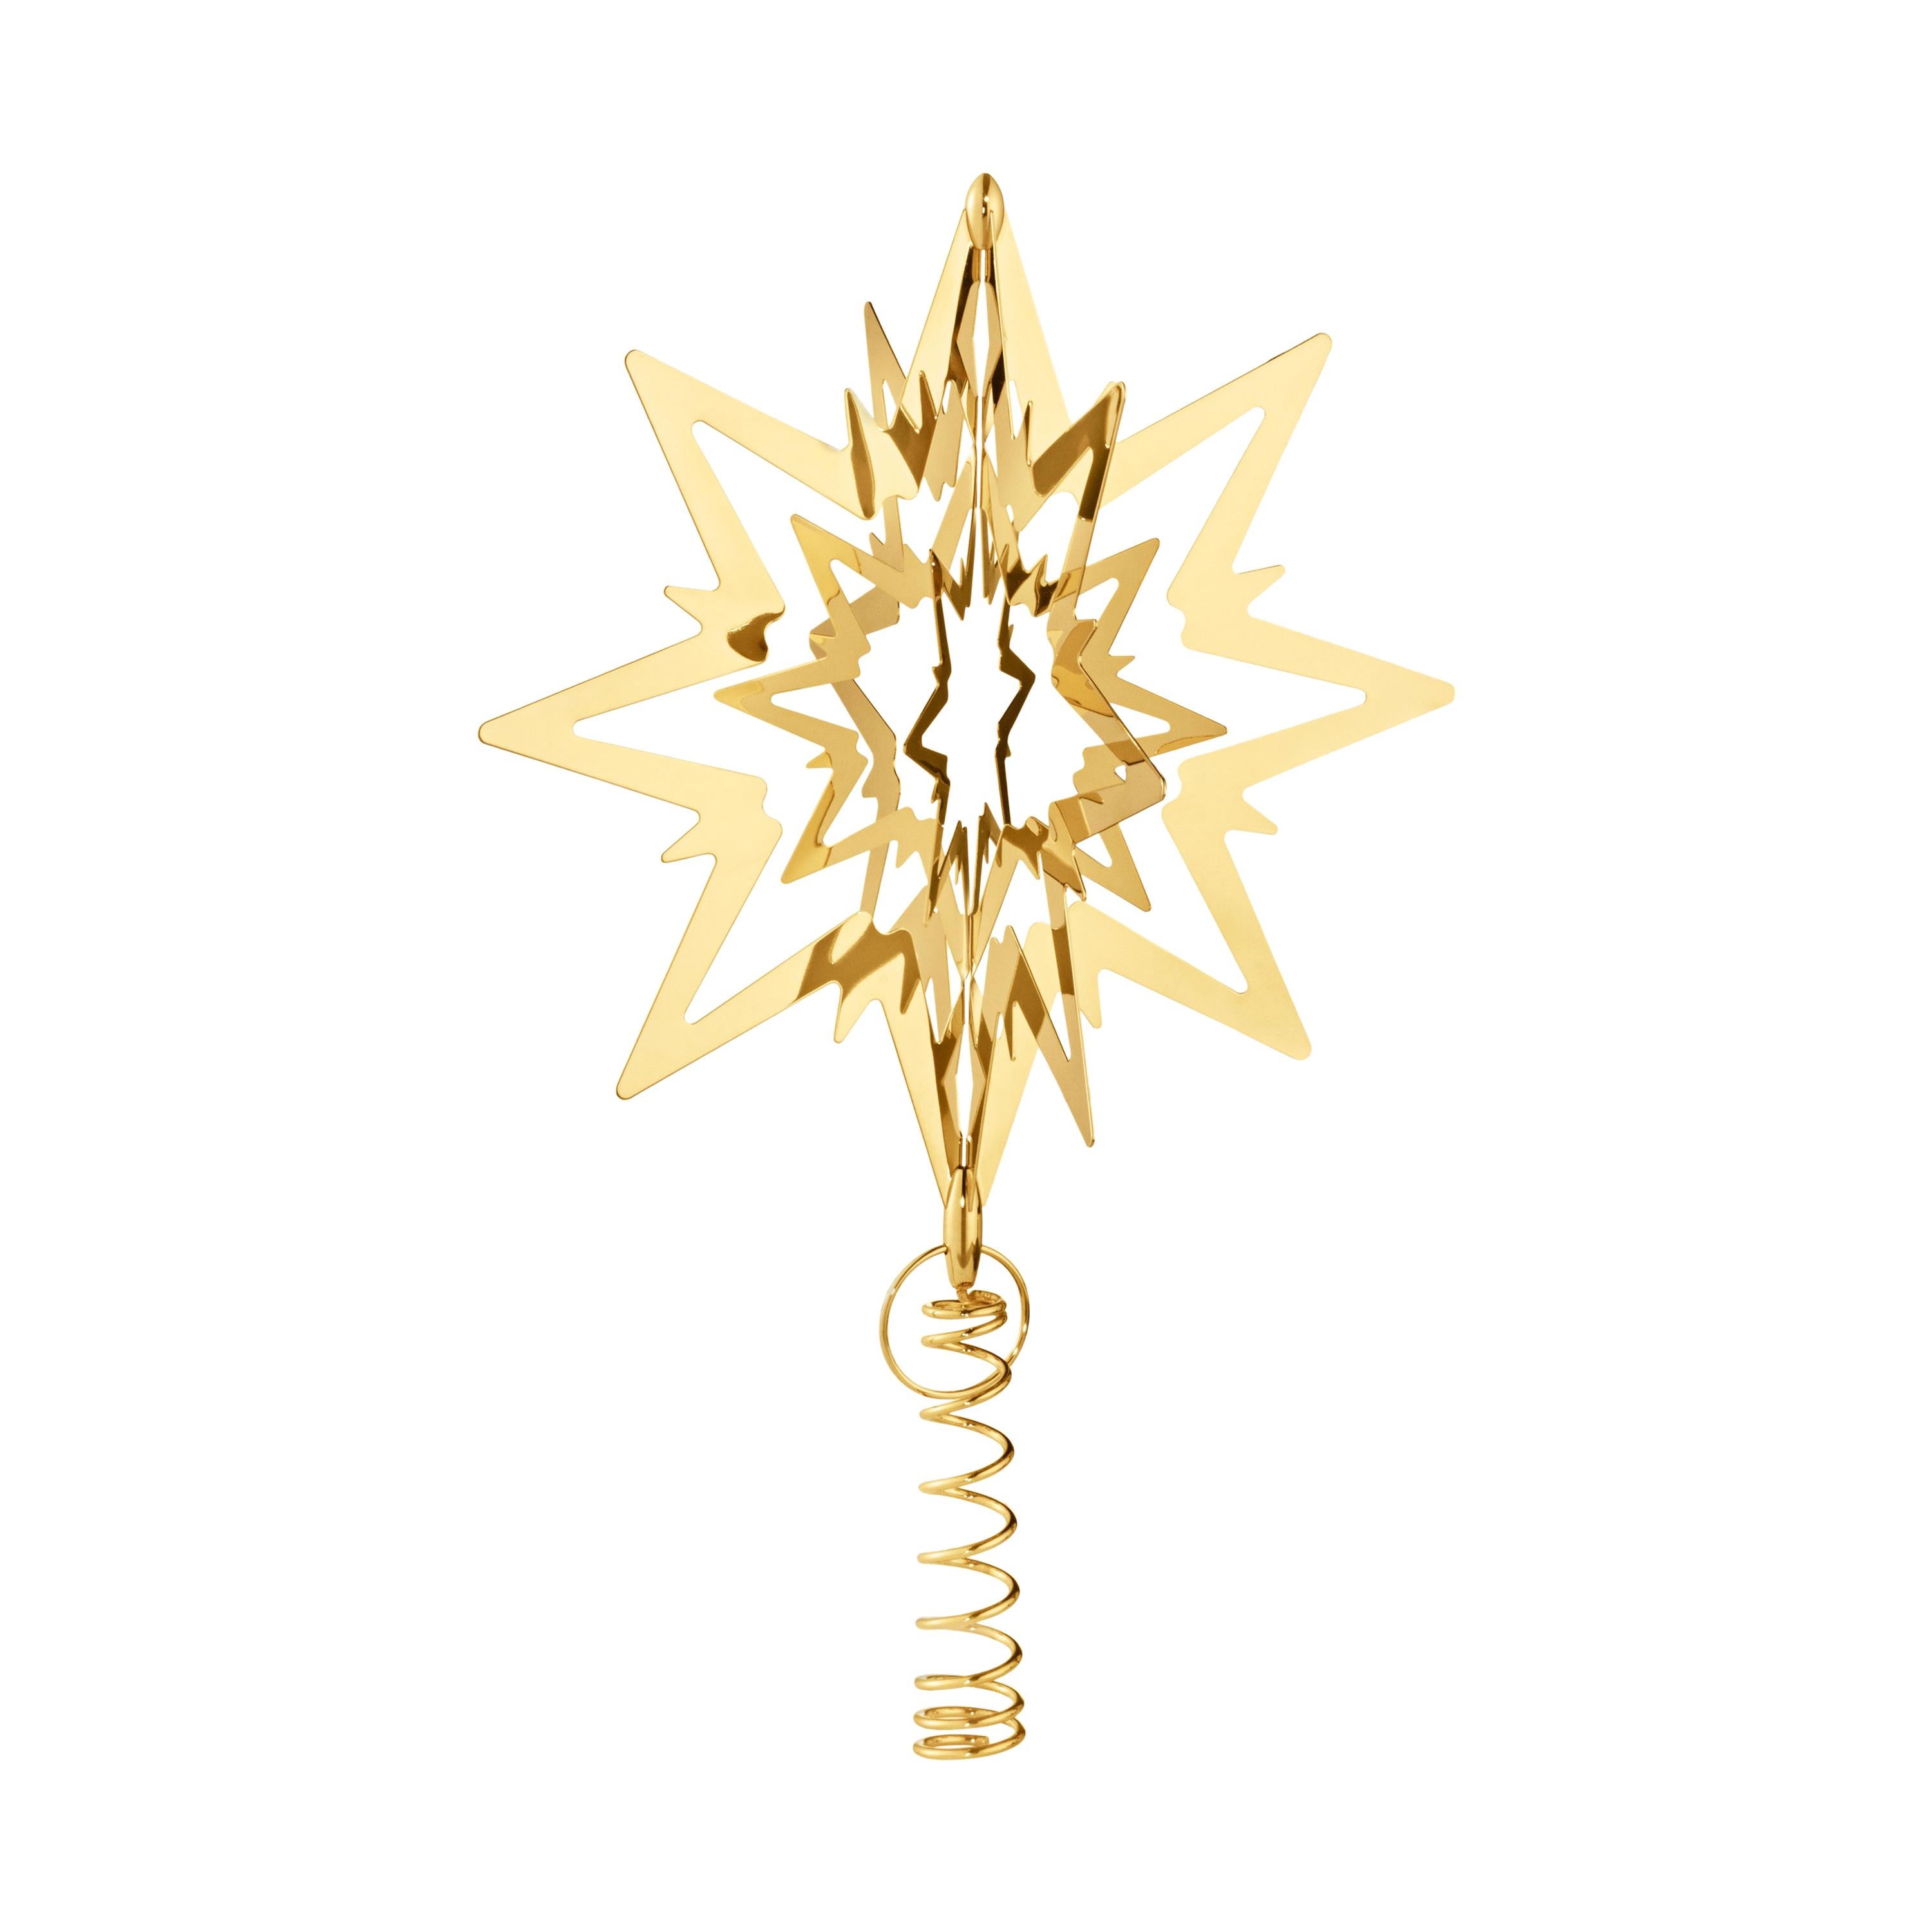 Georg Jensen Medium Christmas Tree Star in Gold Brass by Flemming Eskildsen For Sale